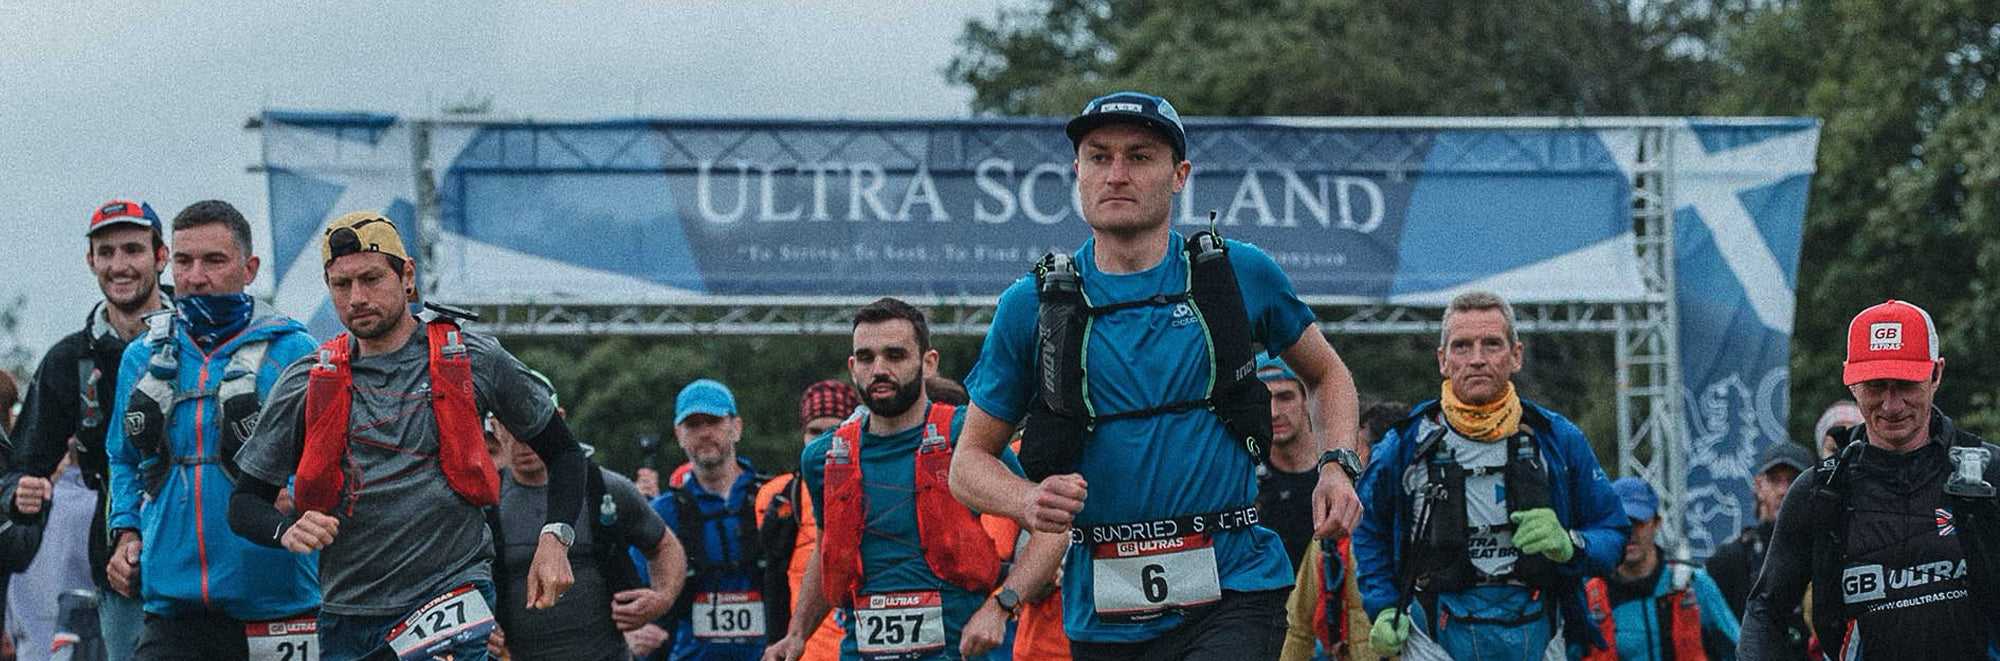 Ultra Scotland 50 Mile